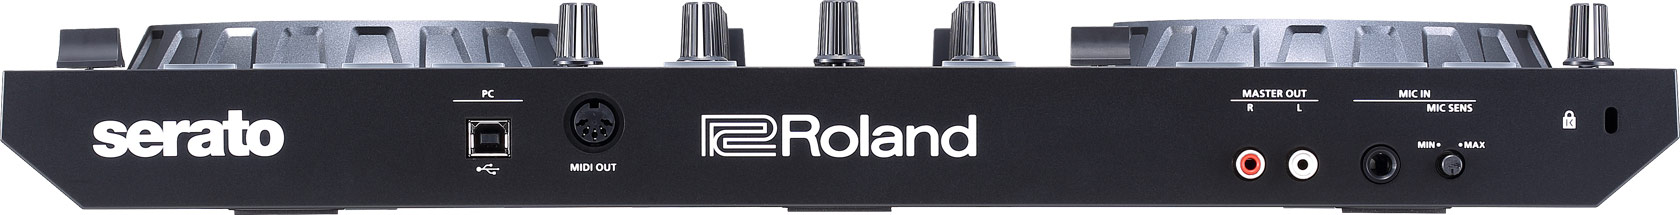 Roland Dj-202 - Controlador DJ USB - Variation 7